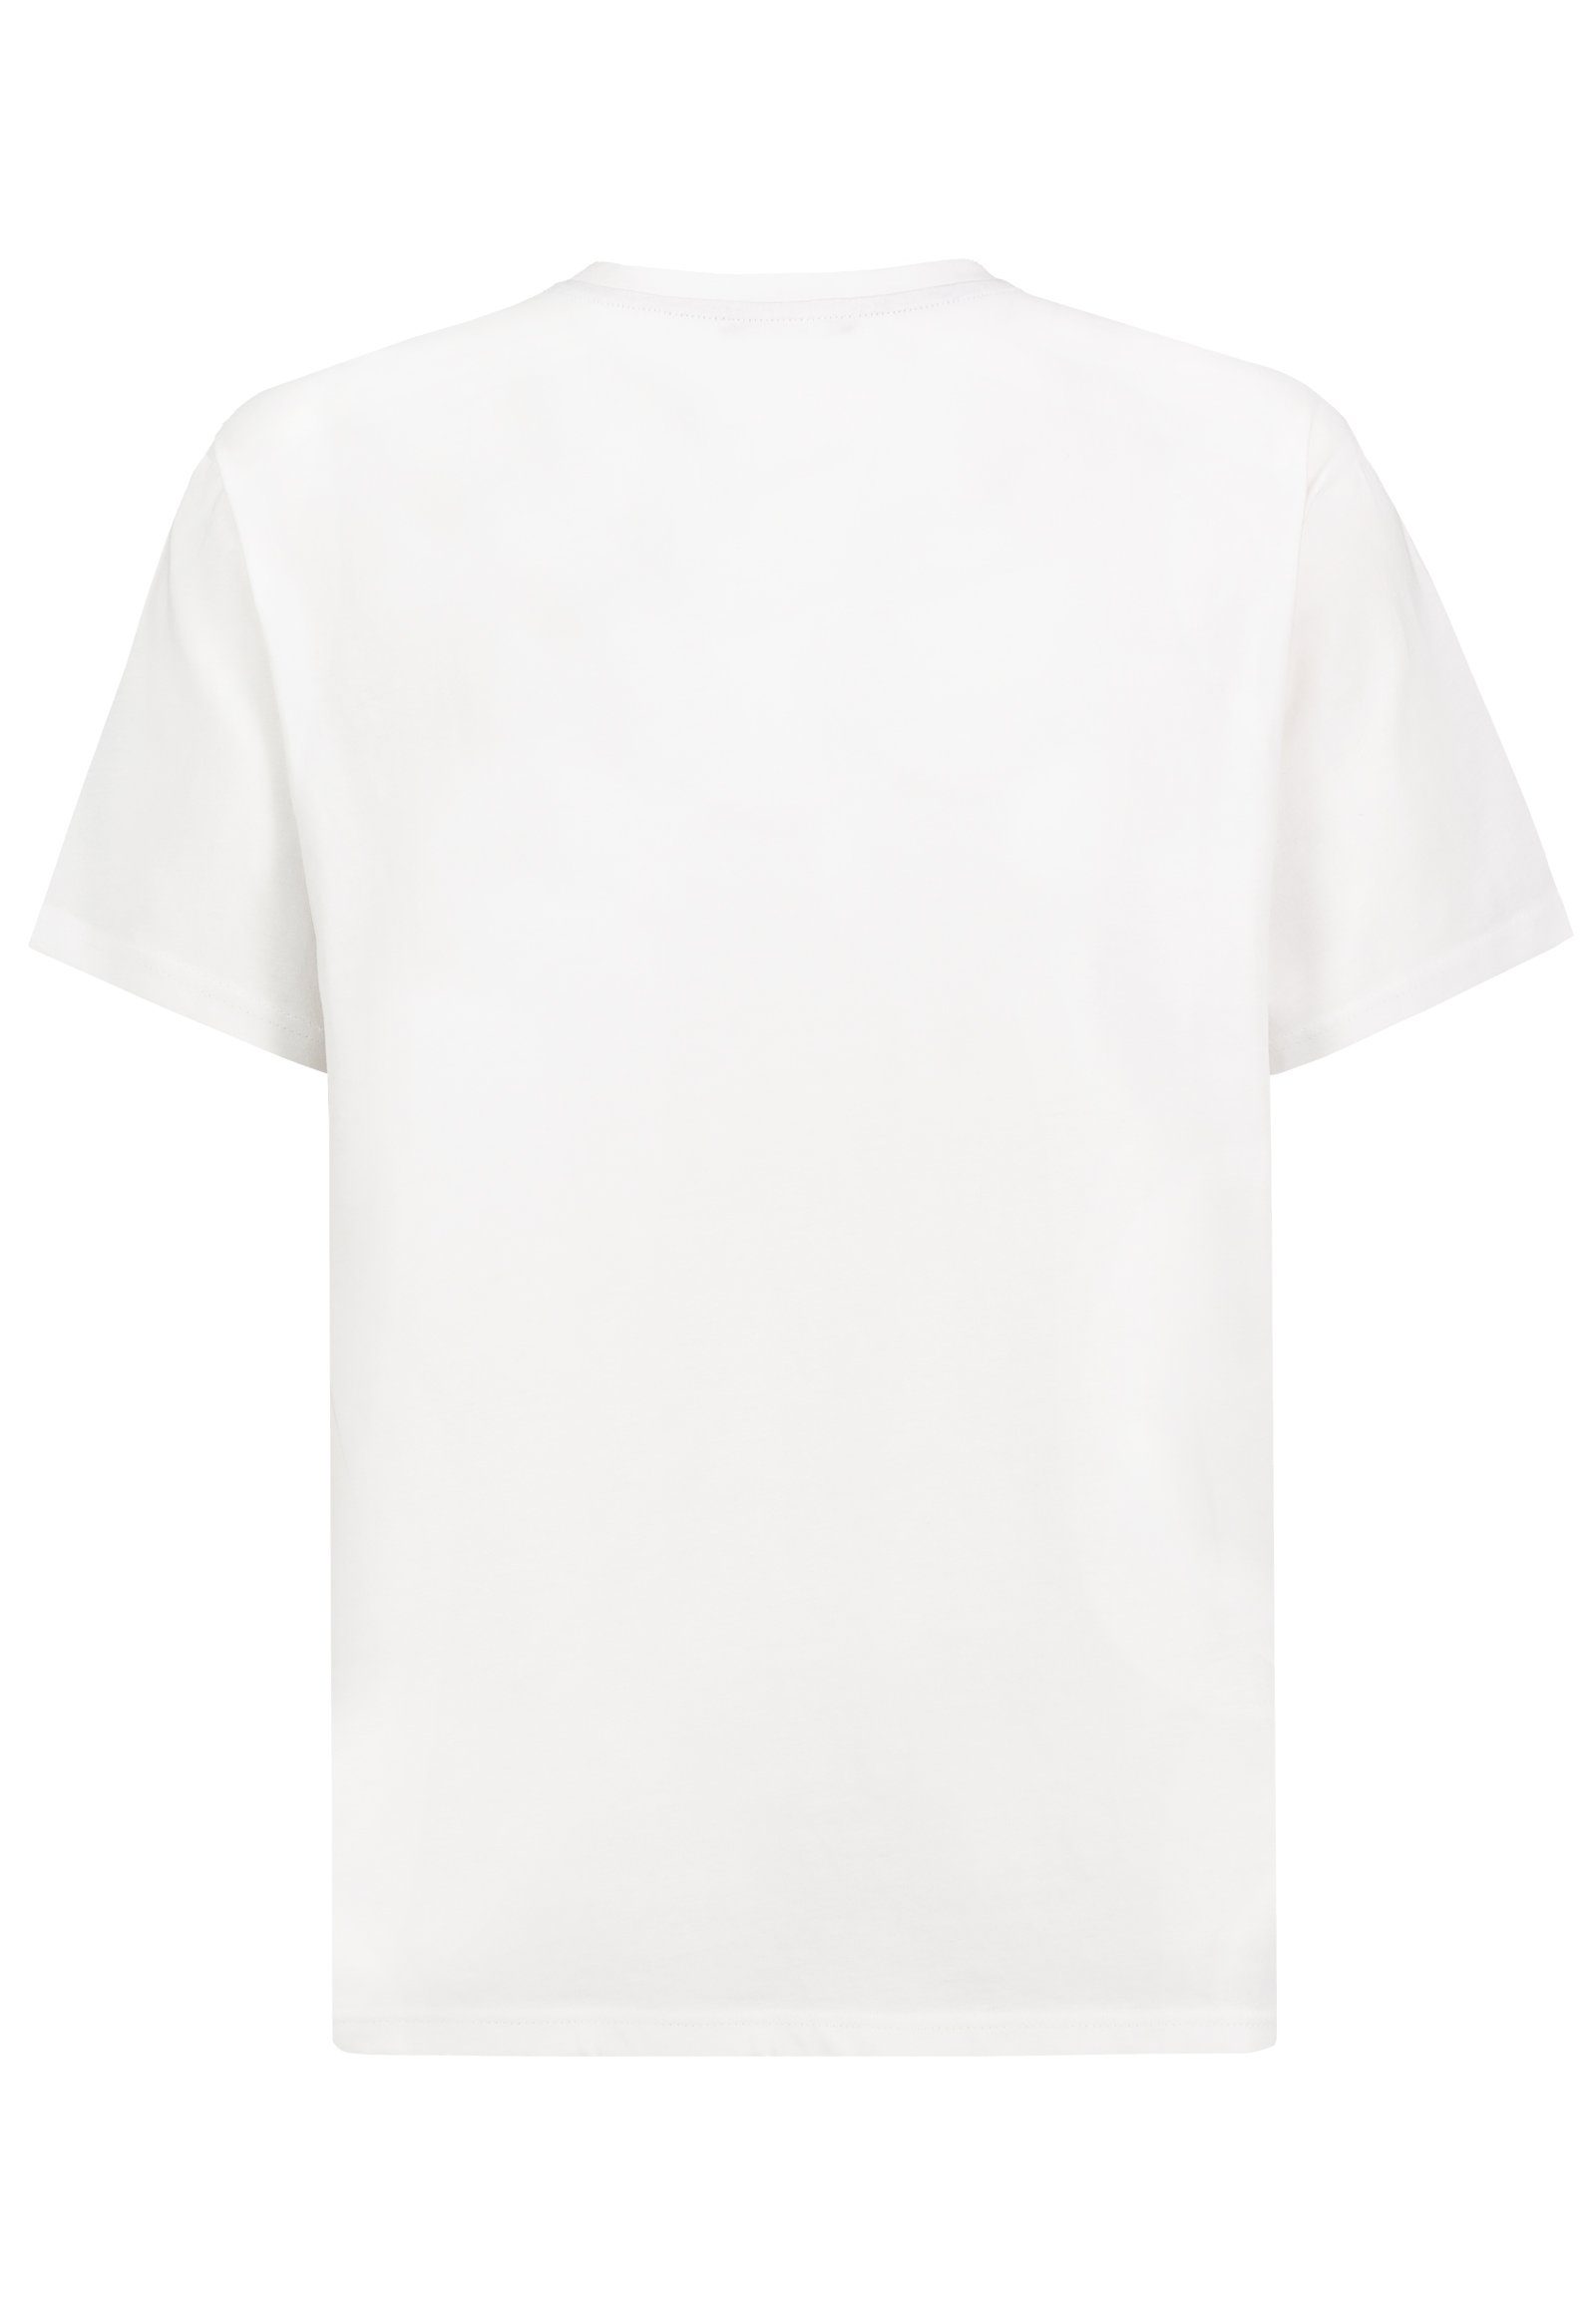 Print white SUBLEVEL mit Sommer T-Shirt T-Shirt